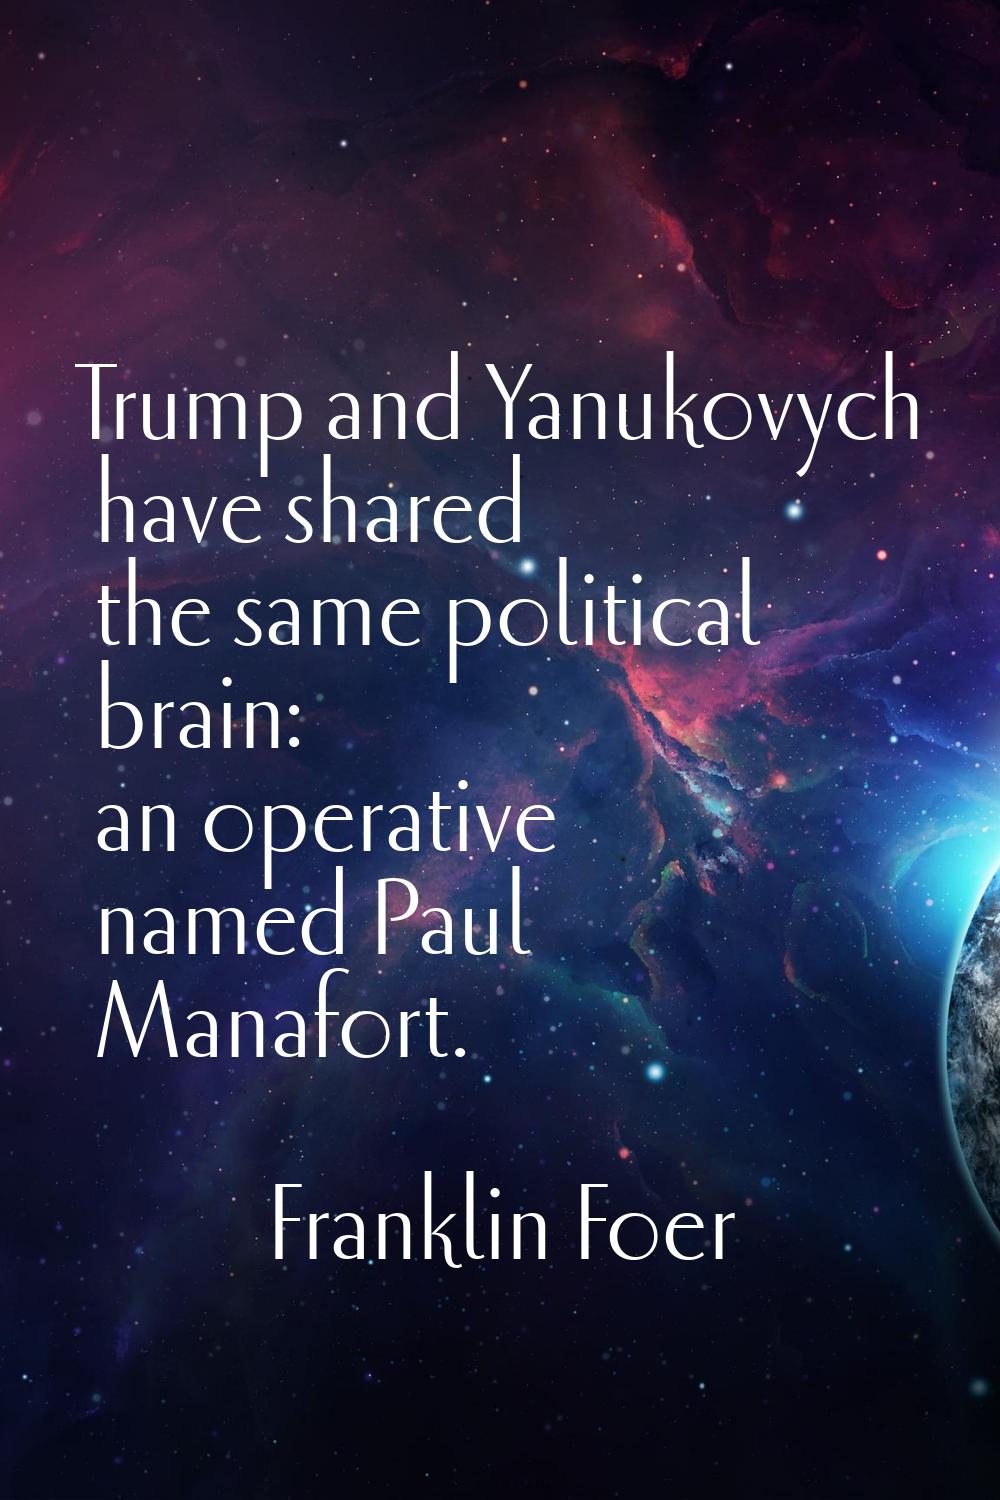 Trump and Yanukovych have shared the same political brain: an operative named Paul Manafort.